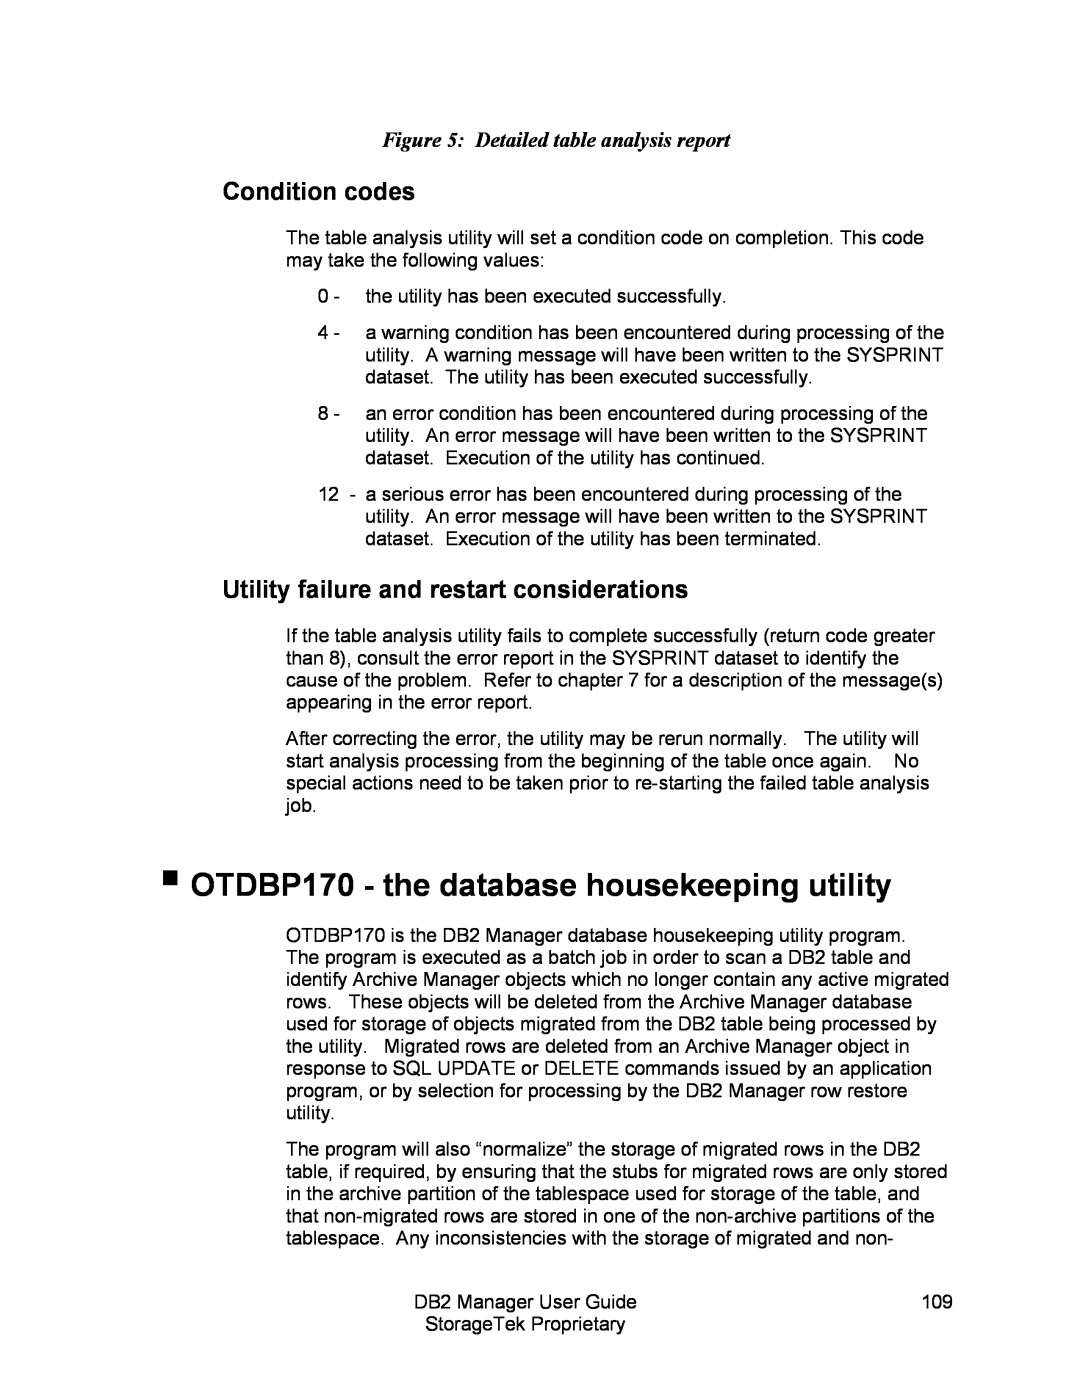 StorageTek 312564001 manual OTDBP170 - the database housekeeping utility, Detailed table analysis report, Condition codes 